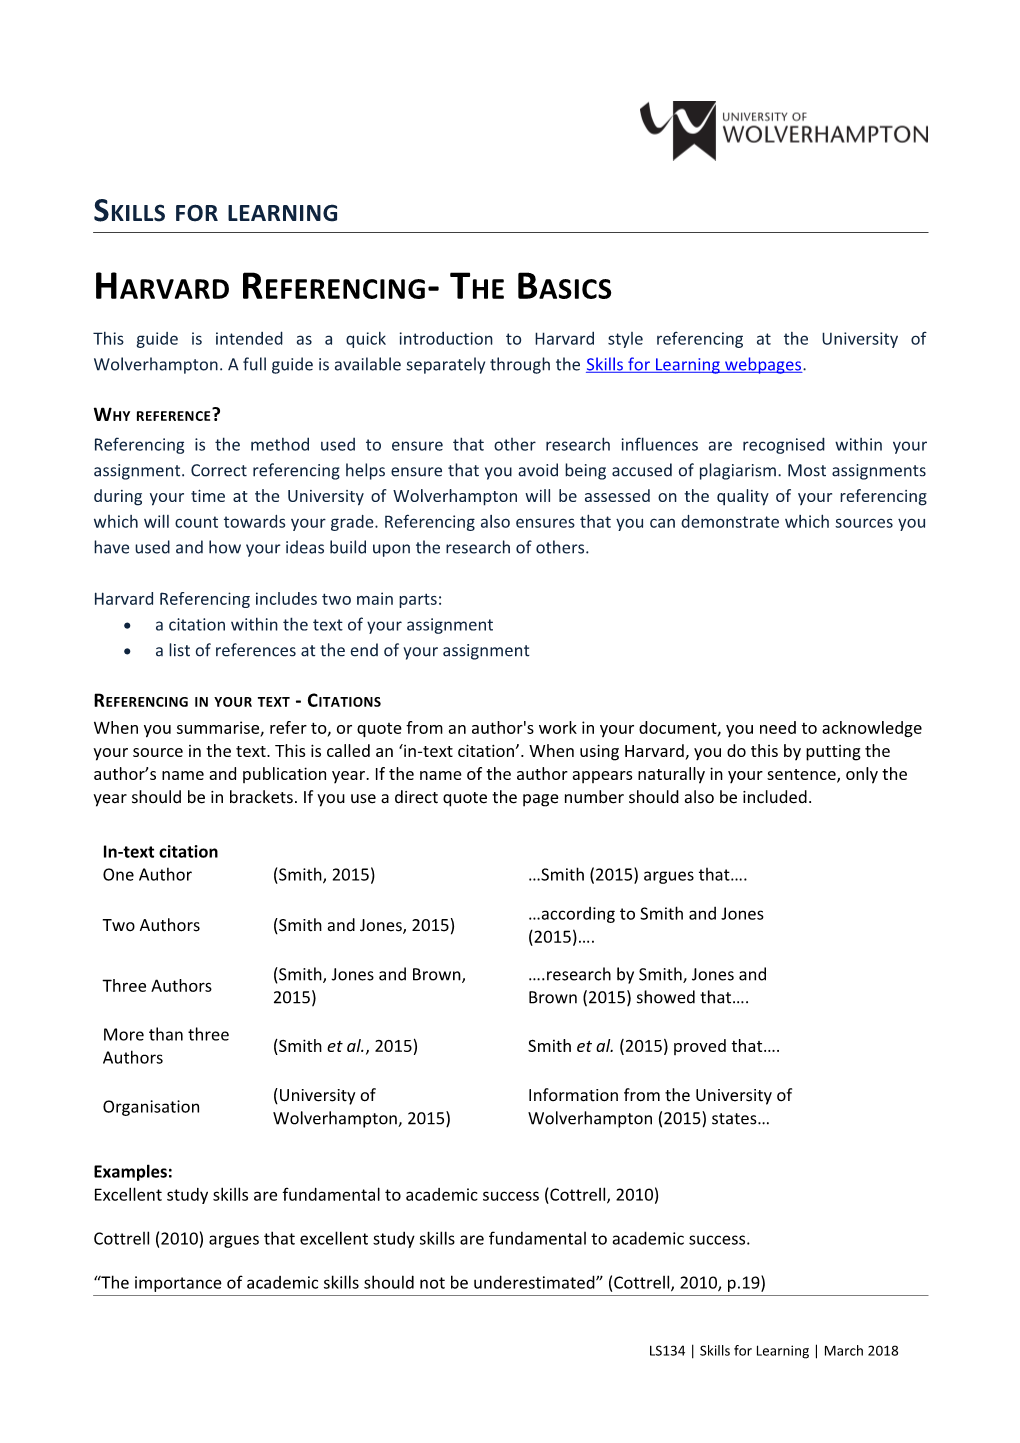 Harvard Referencing- the Basics